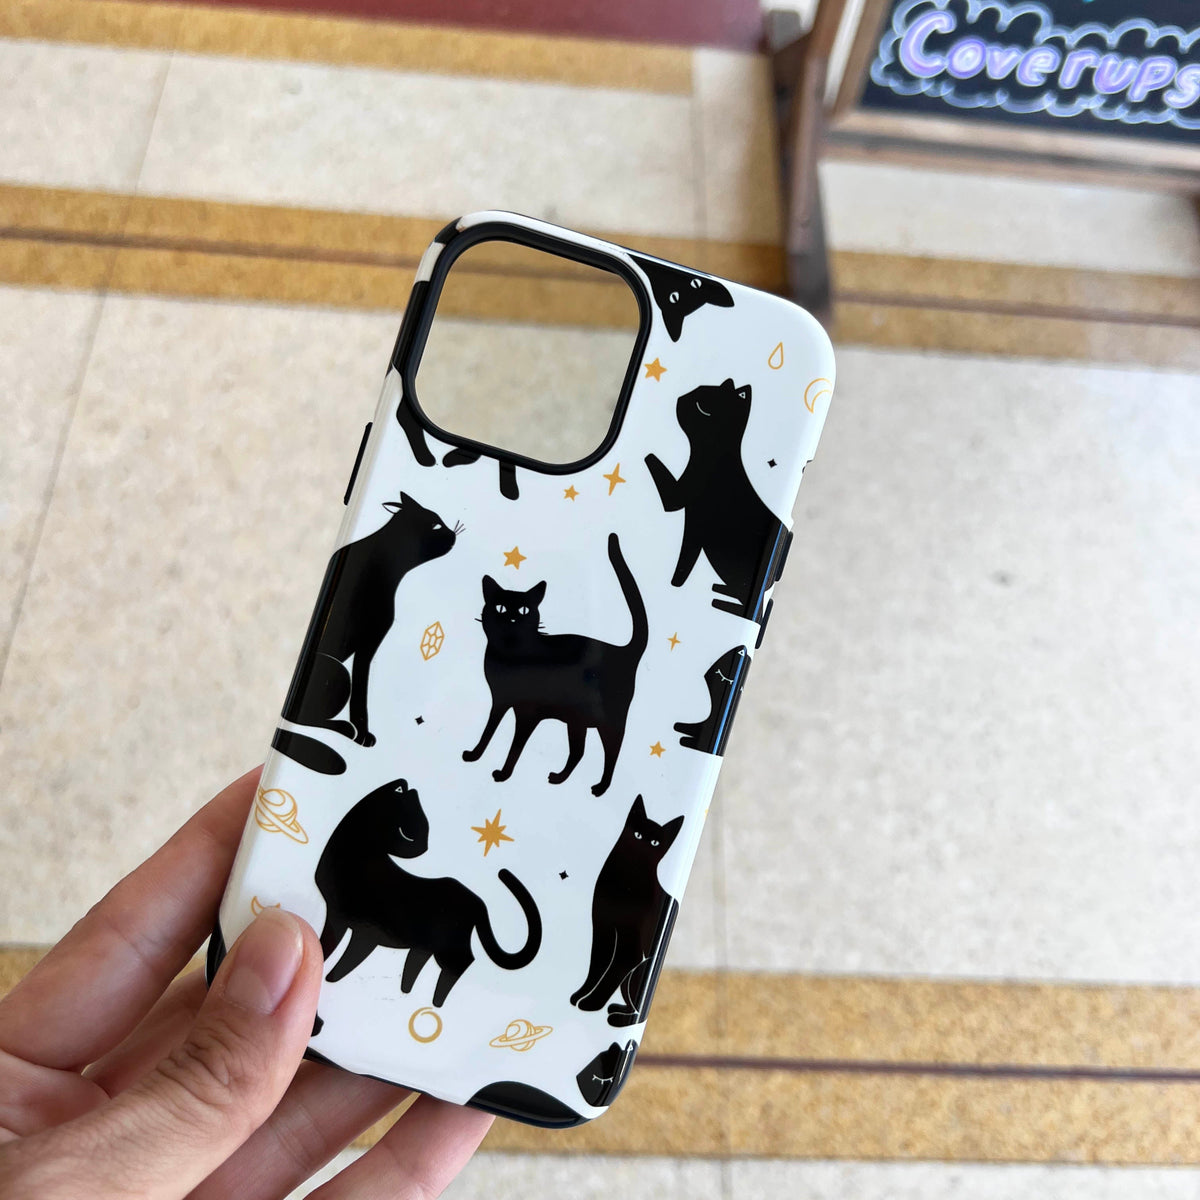 Black Cats iPhone Case - iPhone 12 Mini